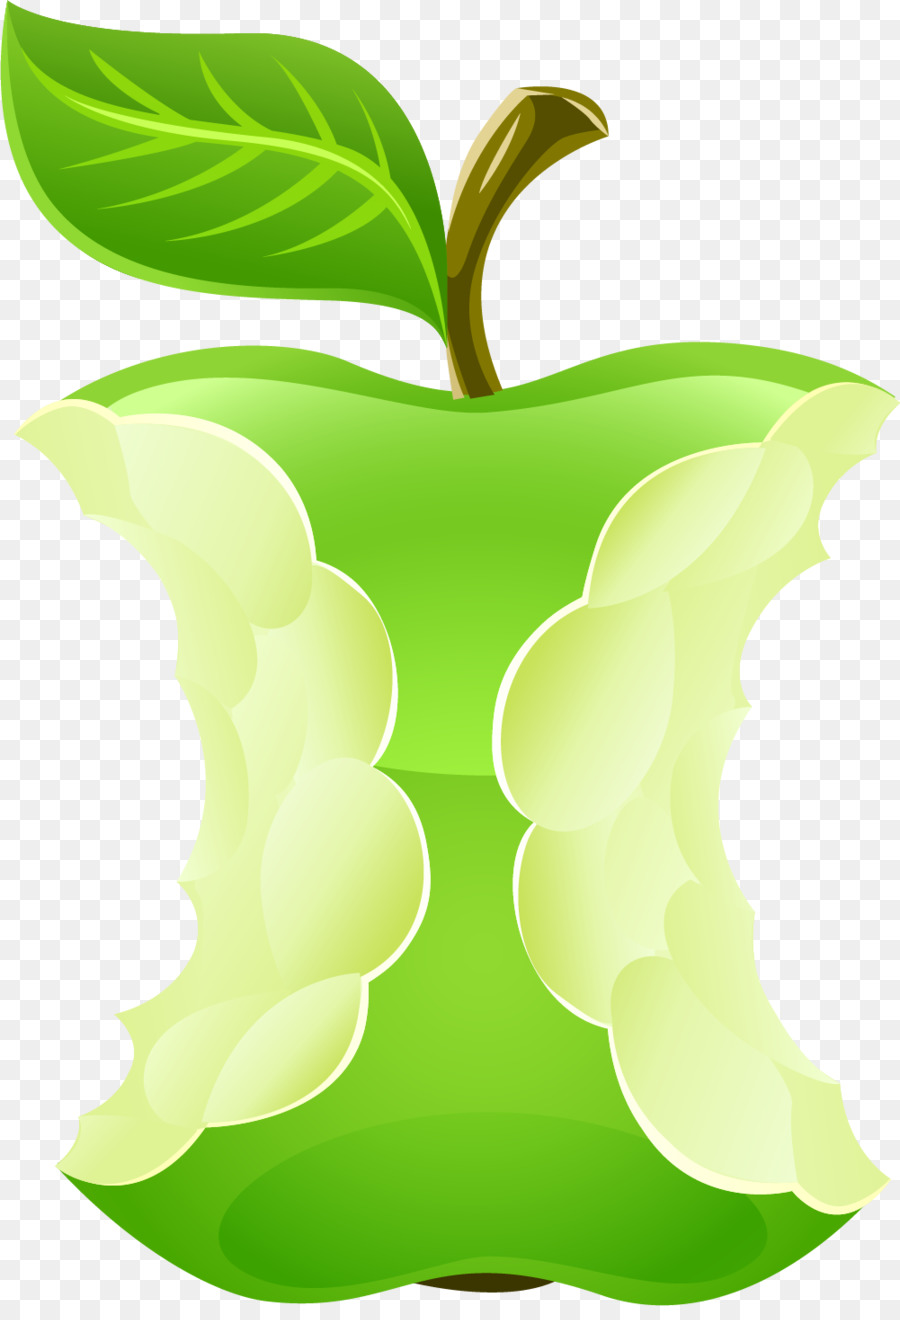 Mela - Cartoon mela verde